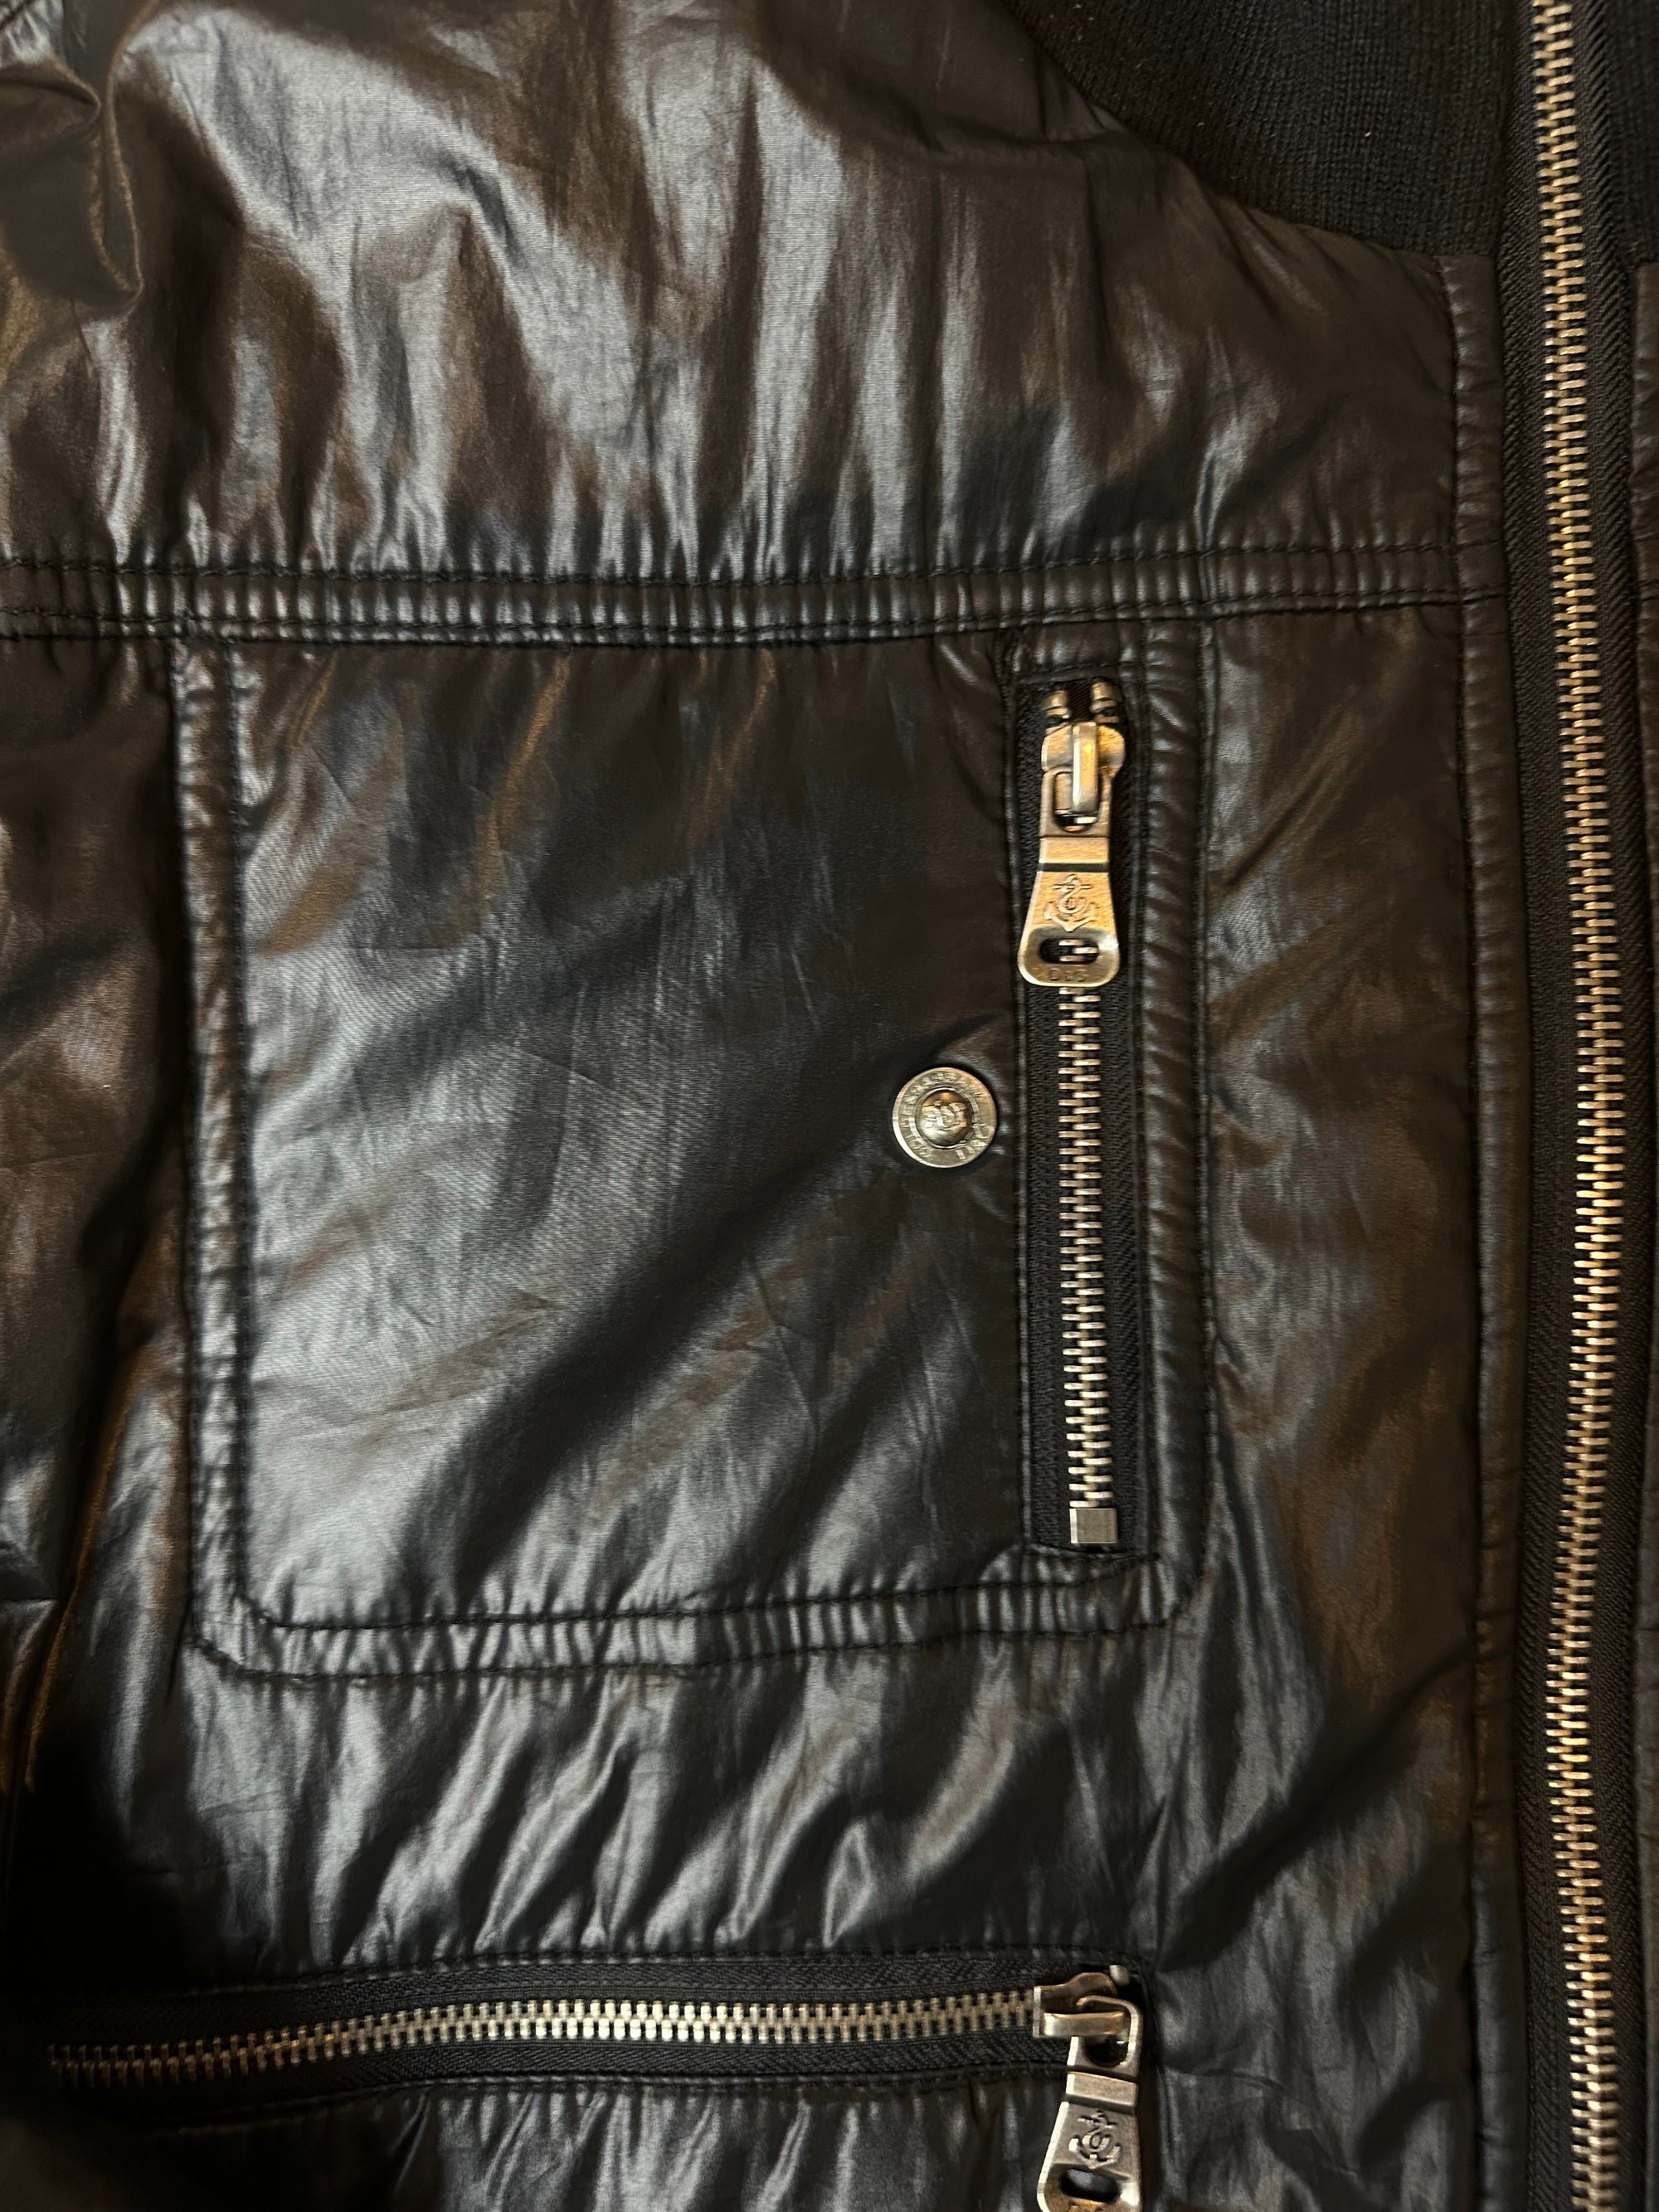 Vintage Dolce&Gabanna Jacket XL